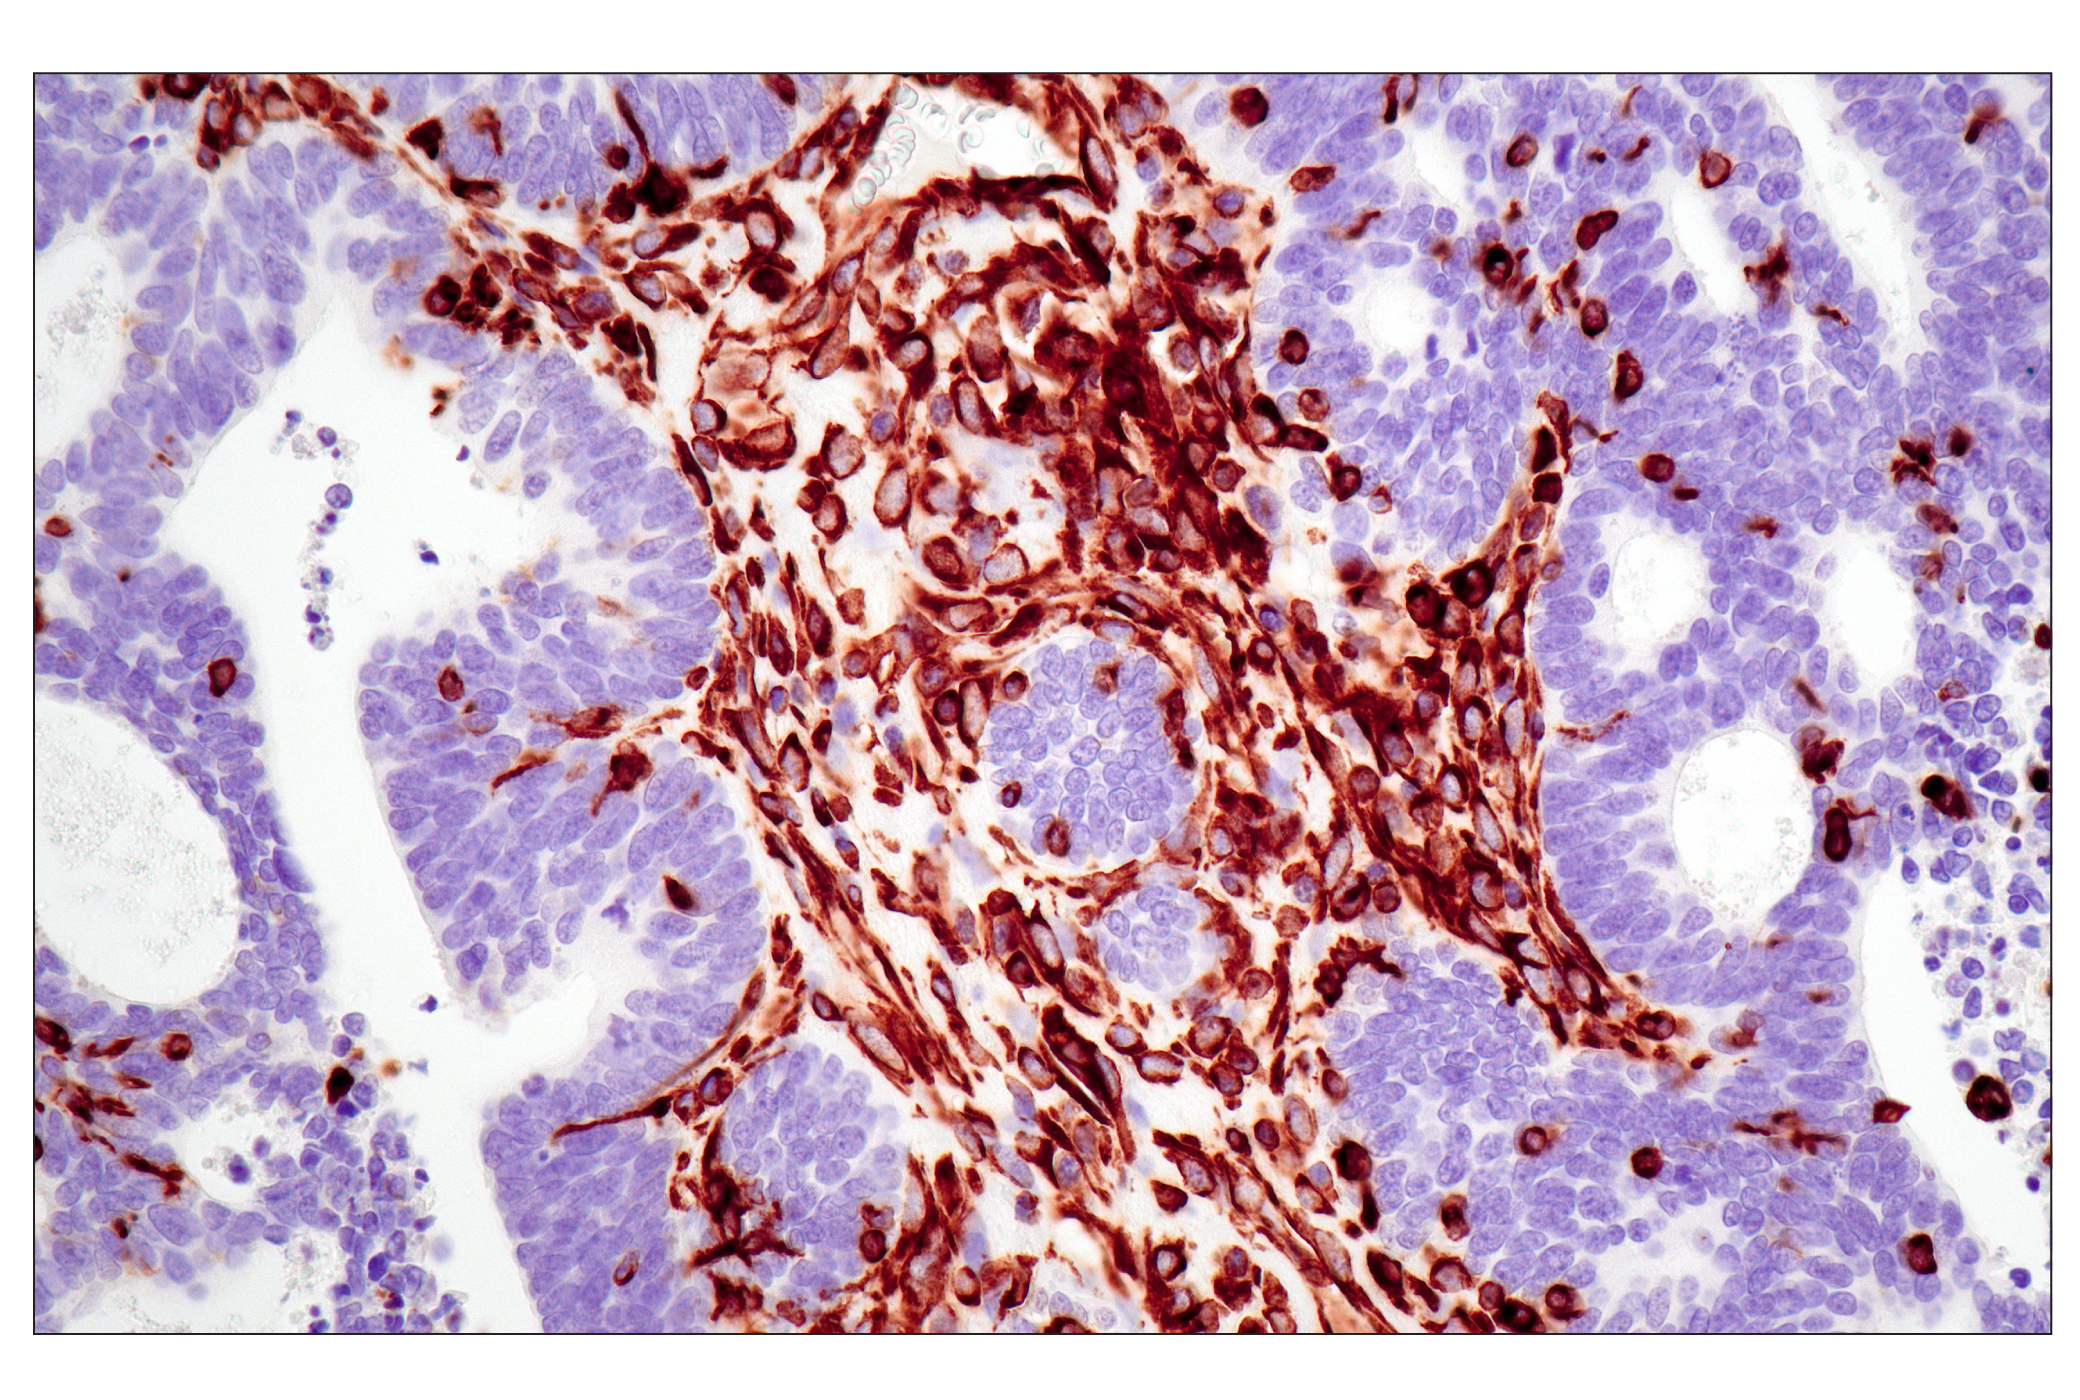  Image 29: Cytoskeletal Marker Antibody Sampler Kit